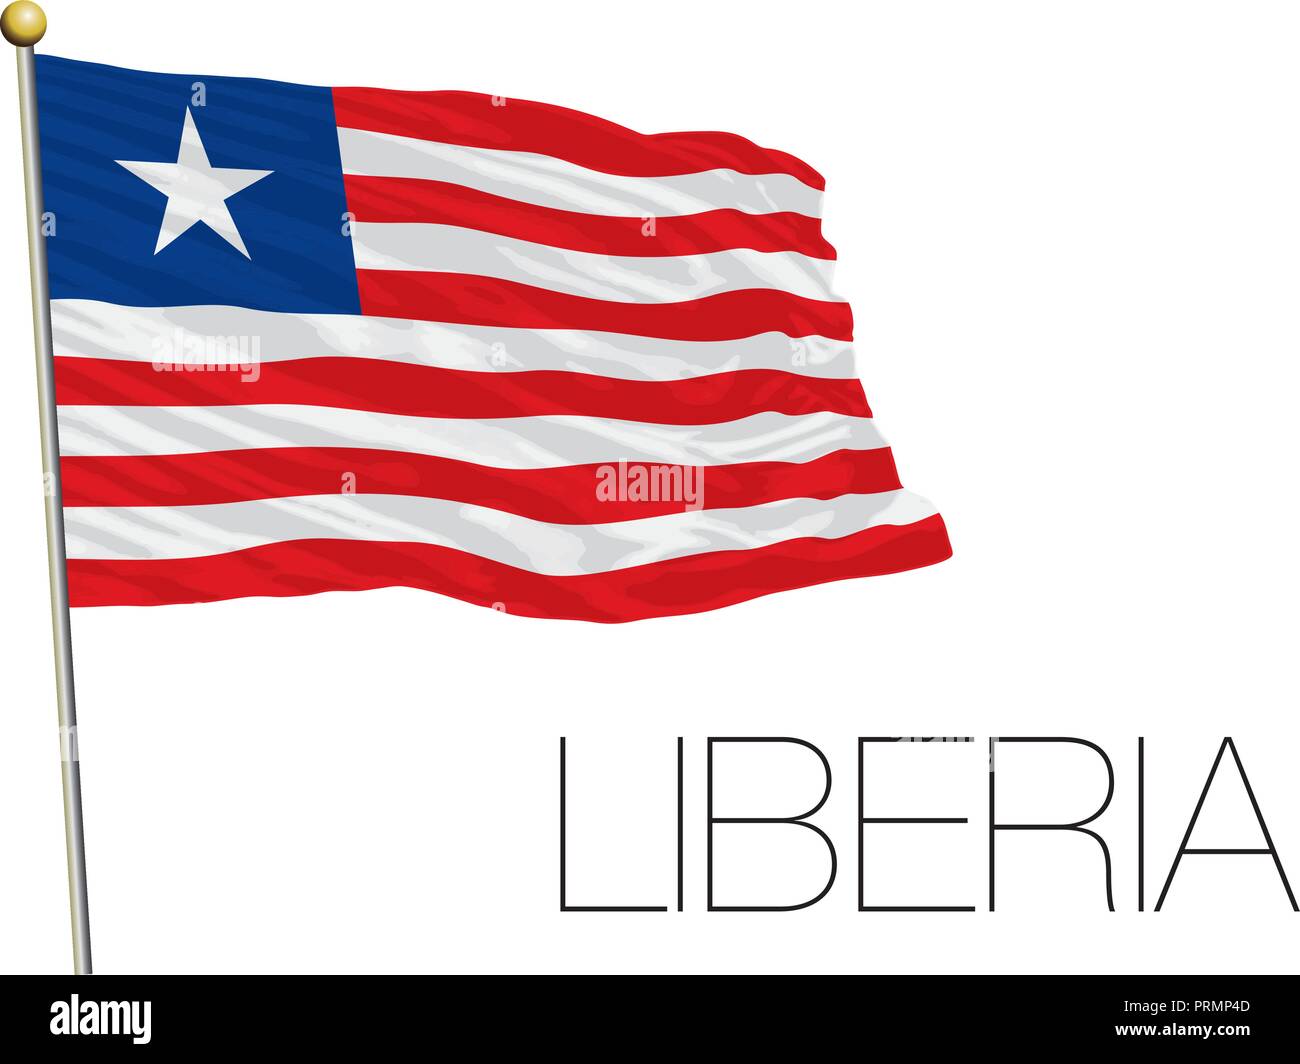 Liberia official flag, vector illustration Stock Vector